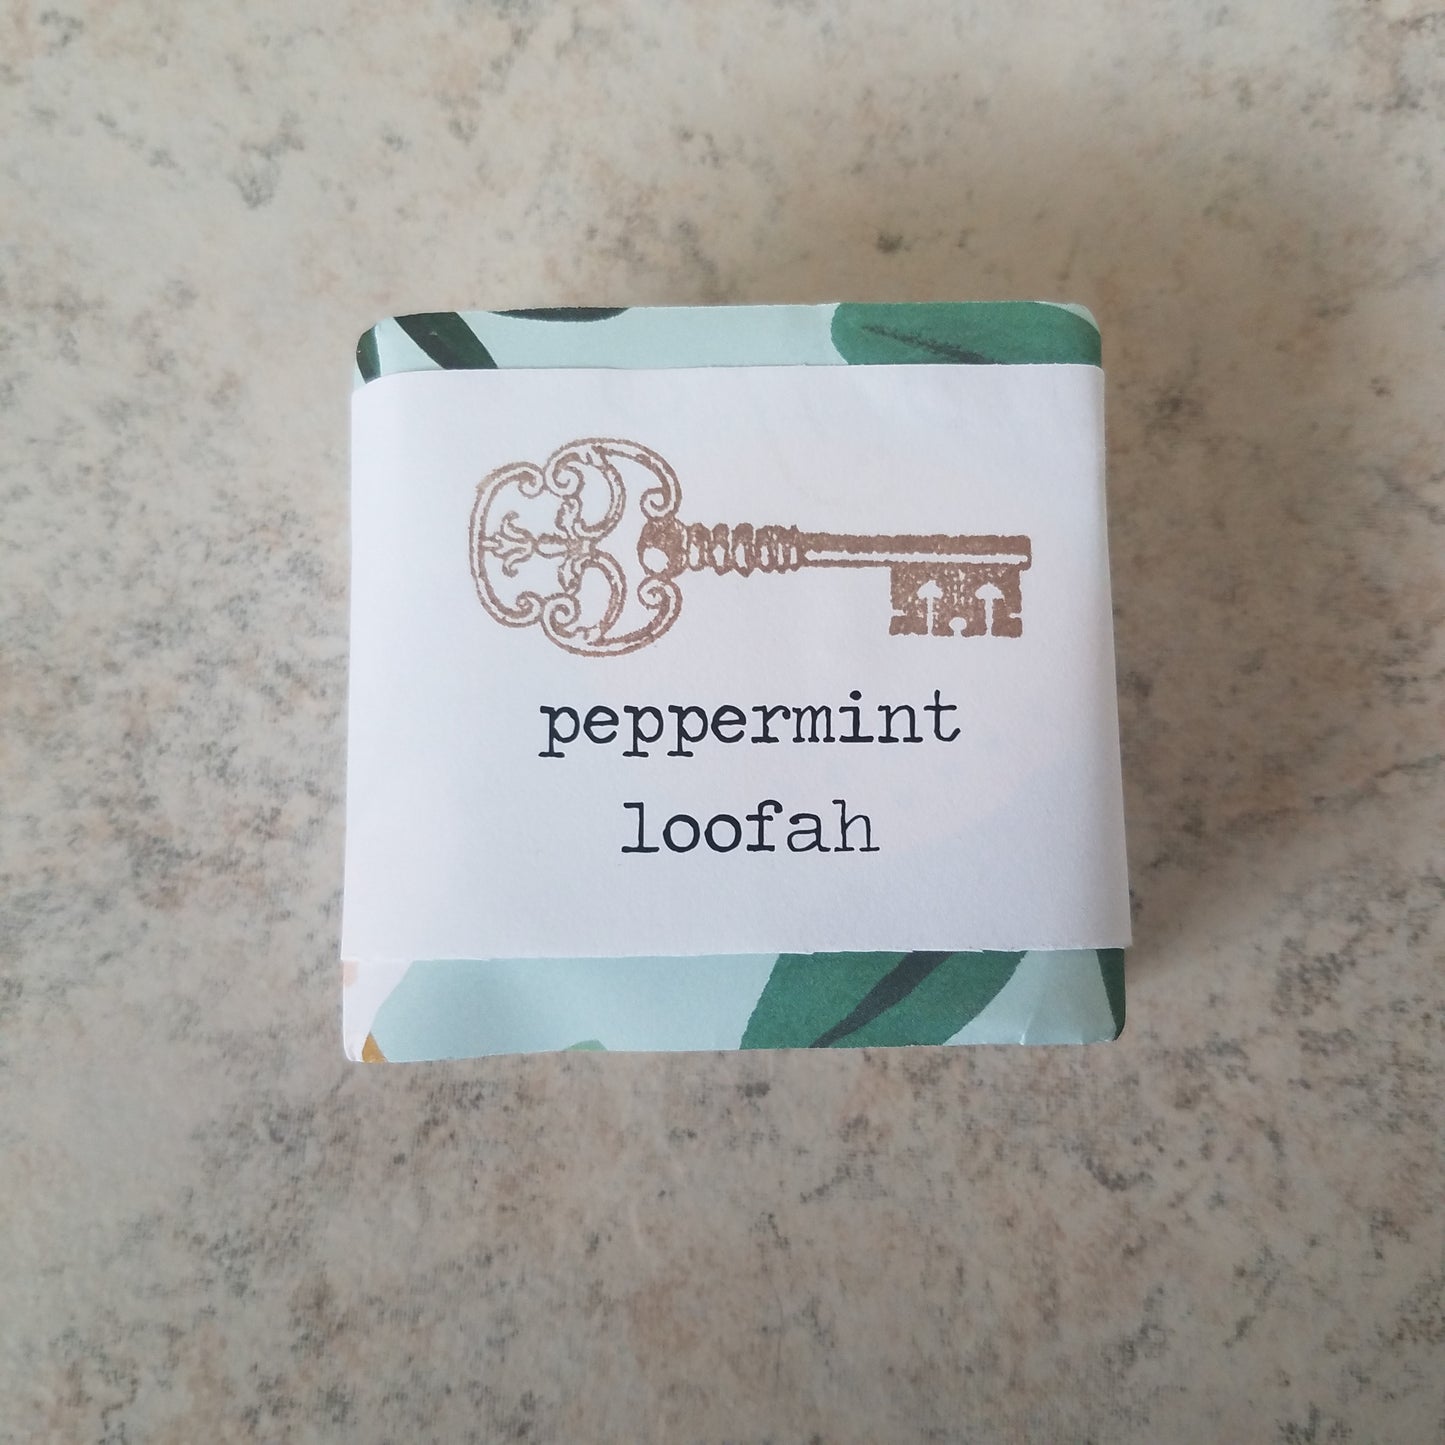 Peppermint Loofah Soap by Dr Dandelion